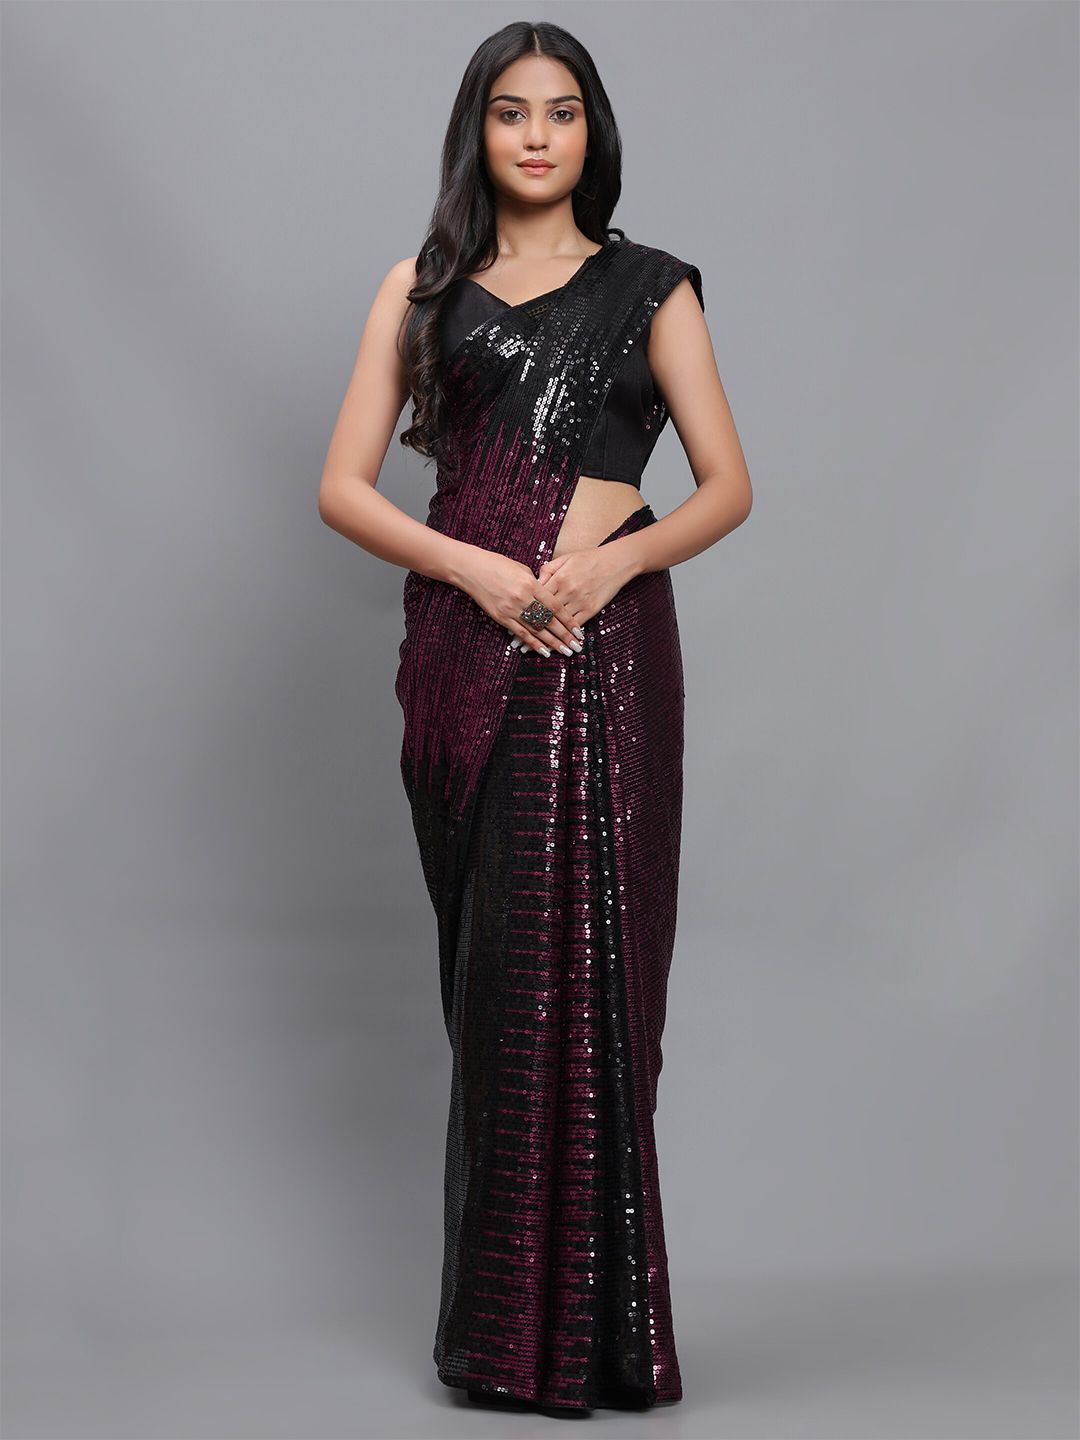 3BUDDY FASHION Magenta & Black Embellished Sequinned Dharmavaram Saree Price in India